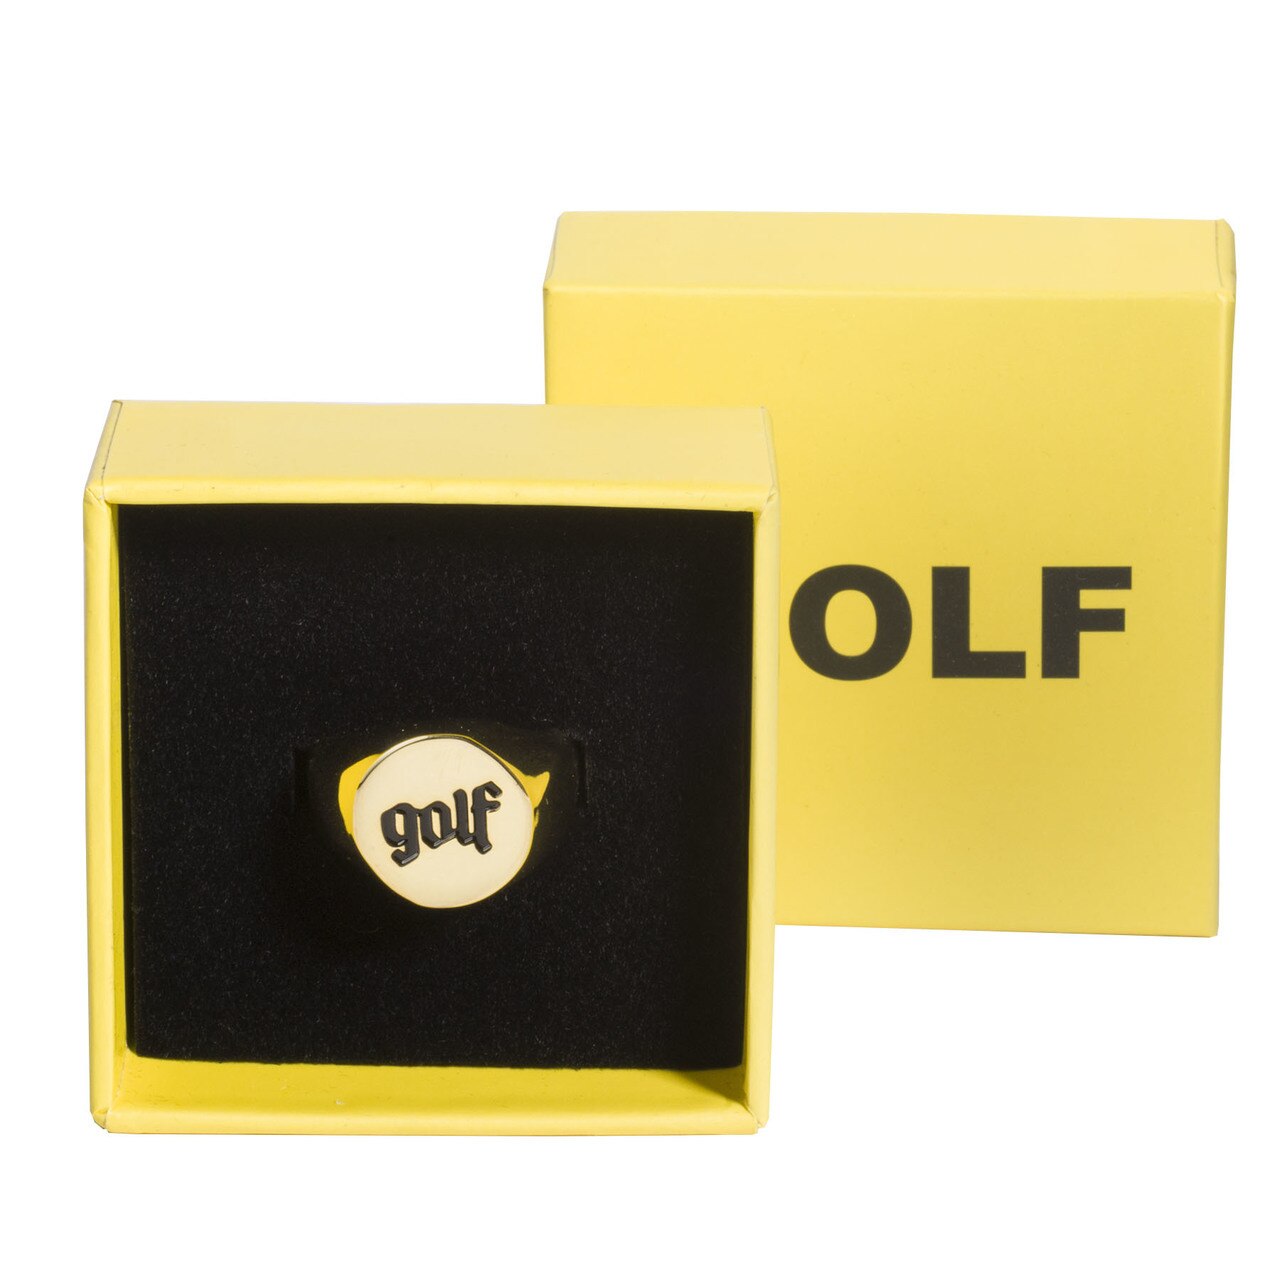 Olde Golf Ring GOLD - Autumn 2018 - Golf Wang